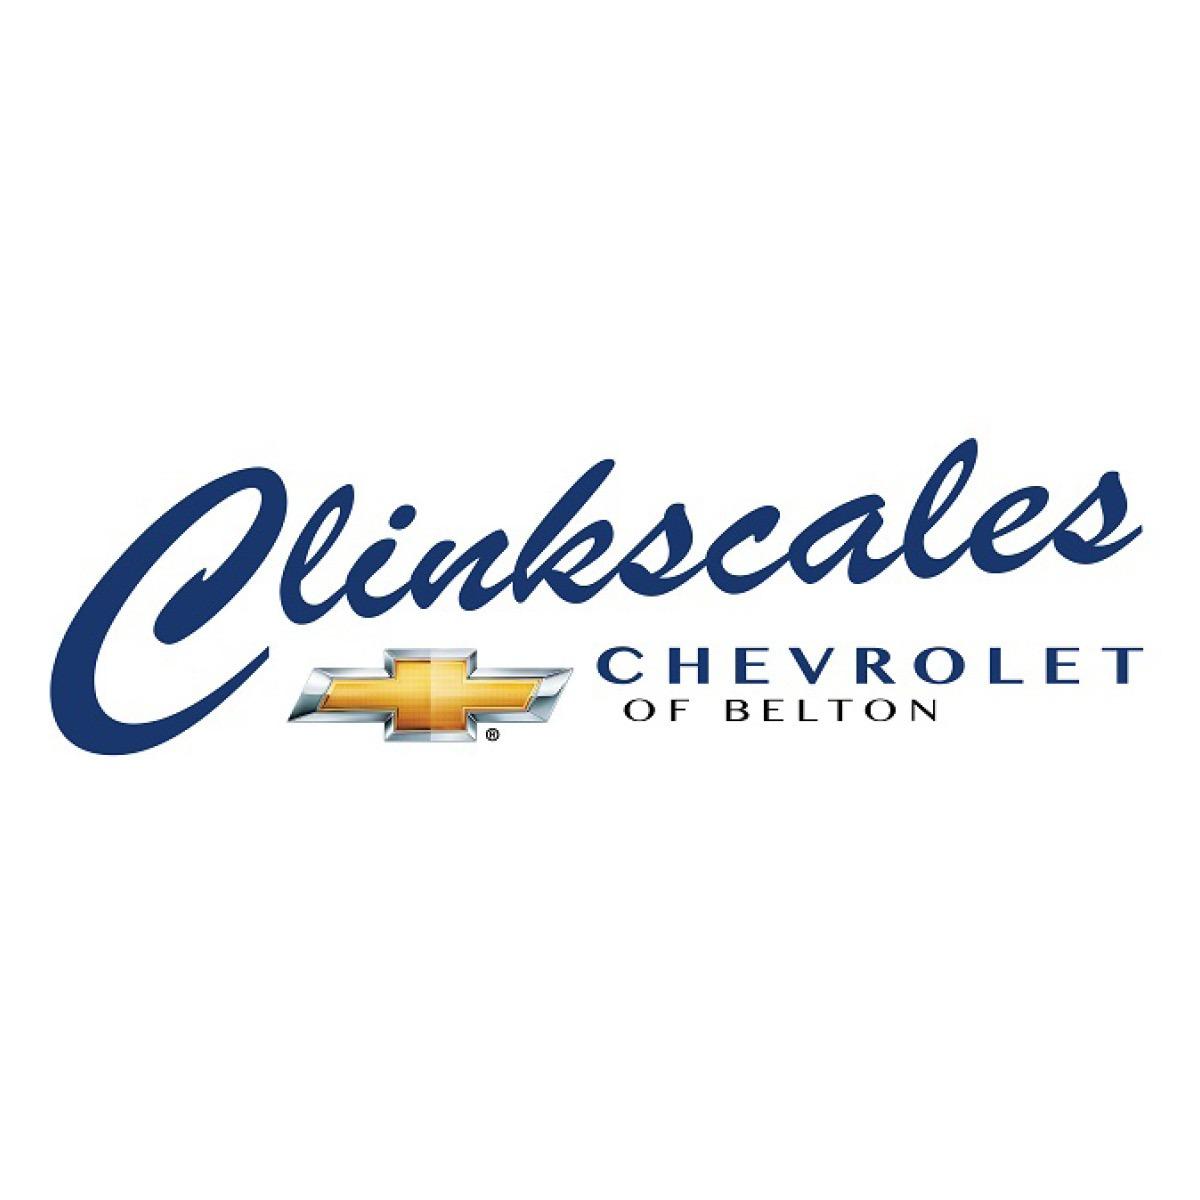 Clinkscales Chevrolet - Belton, SC 29627 - (864)400-2428 | ShowMeLocal.com